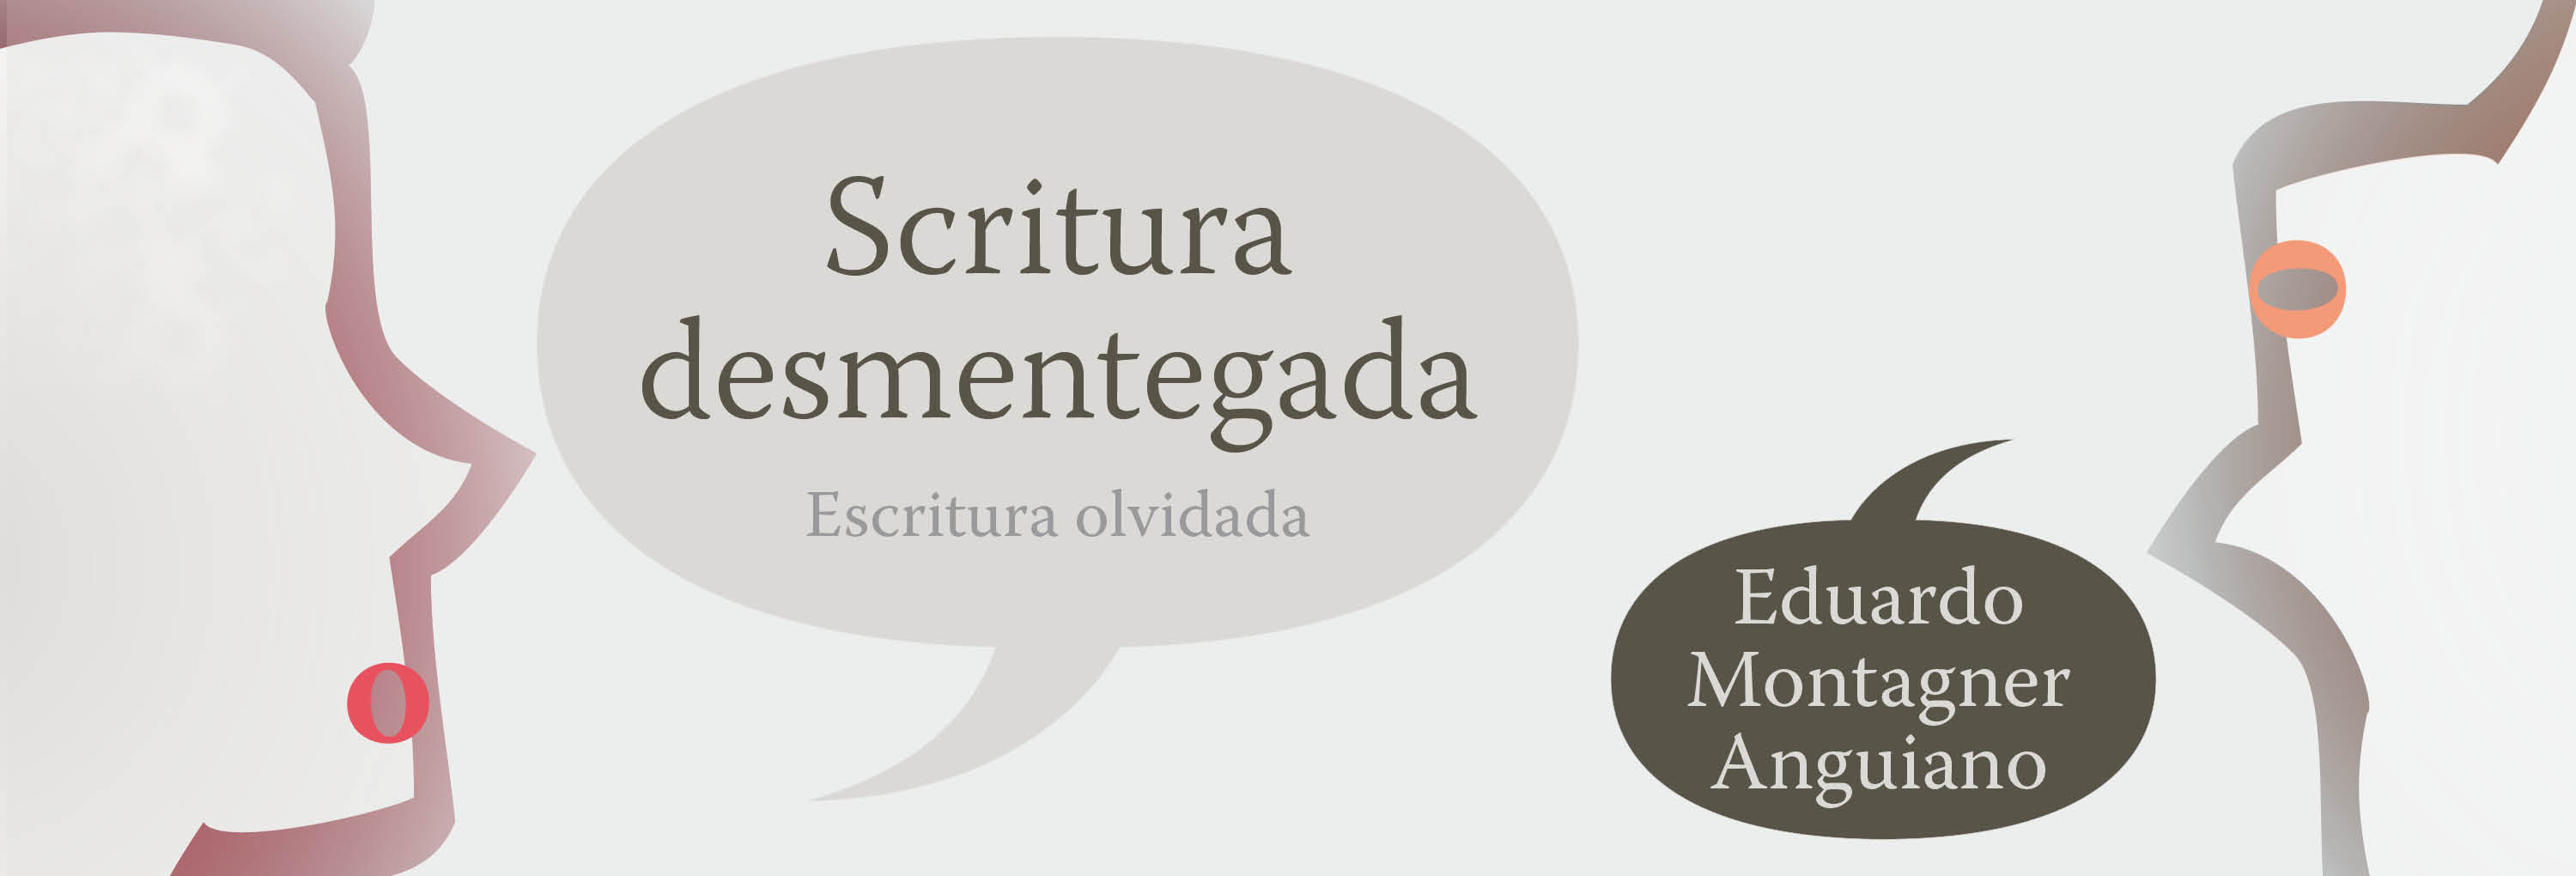 Banner del texto Scritura desmentegada / Escritura olvidada de Eduardo Montagner Anguiano